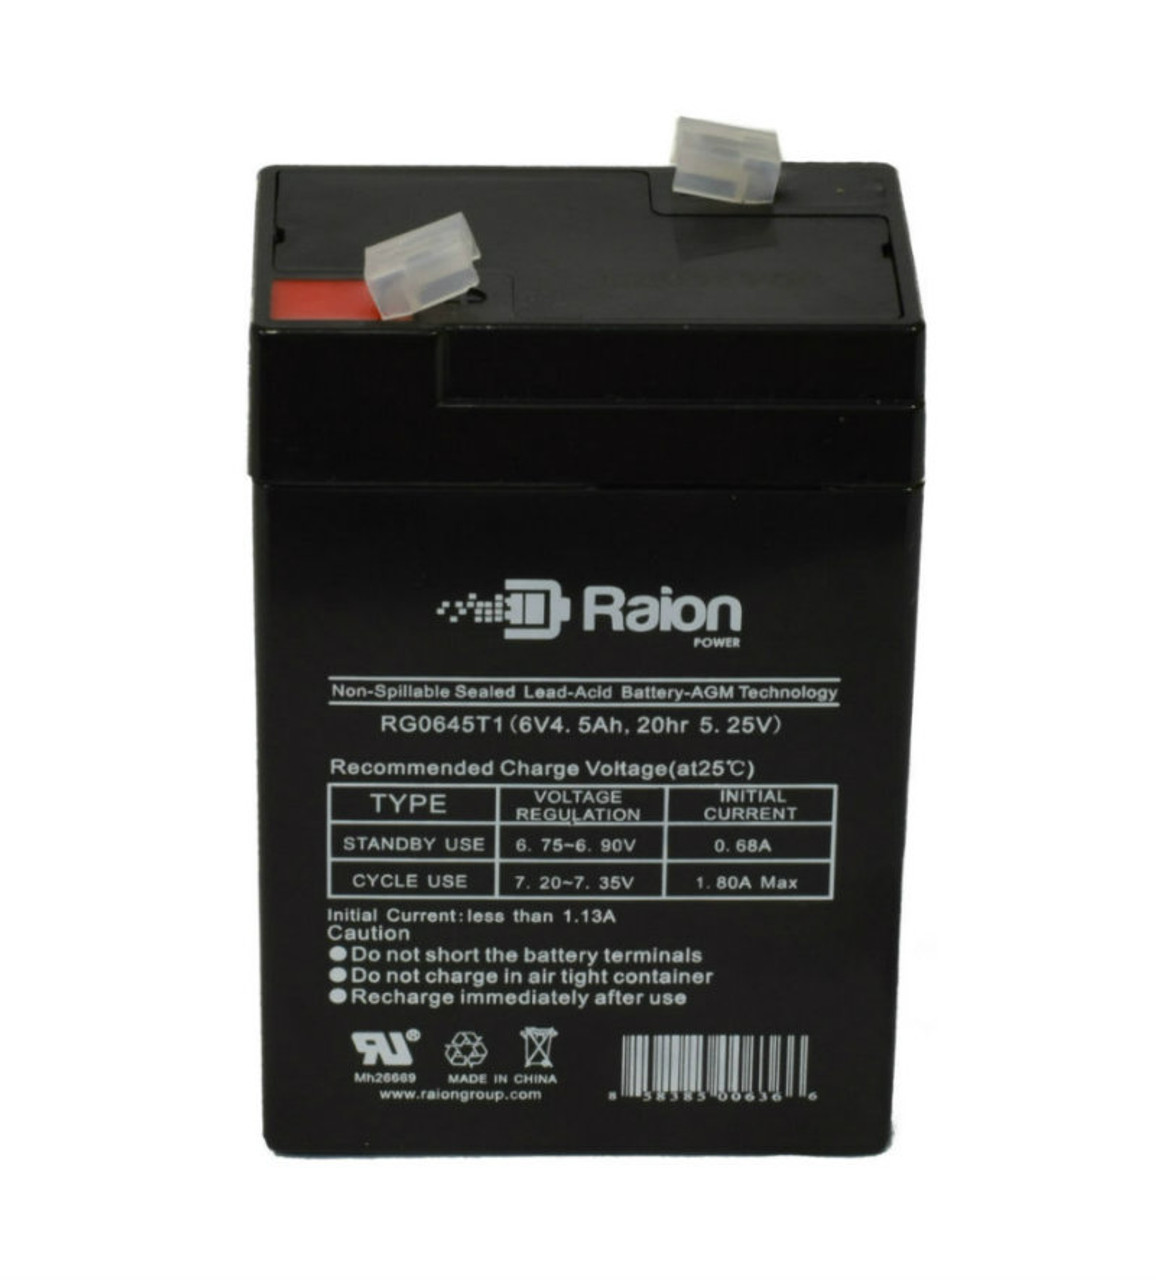 Raion Power RG0645T1 Replacement Battery Cartridge for Peak Energy PK6V4.5F1